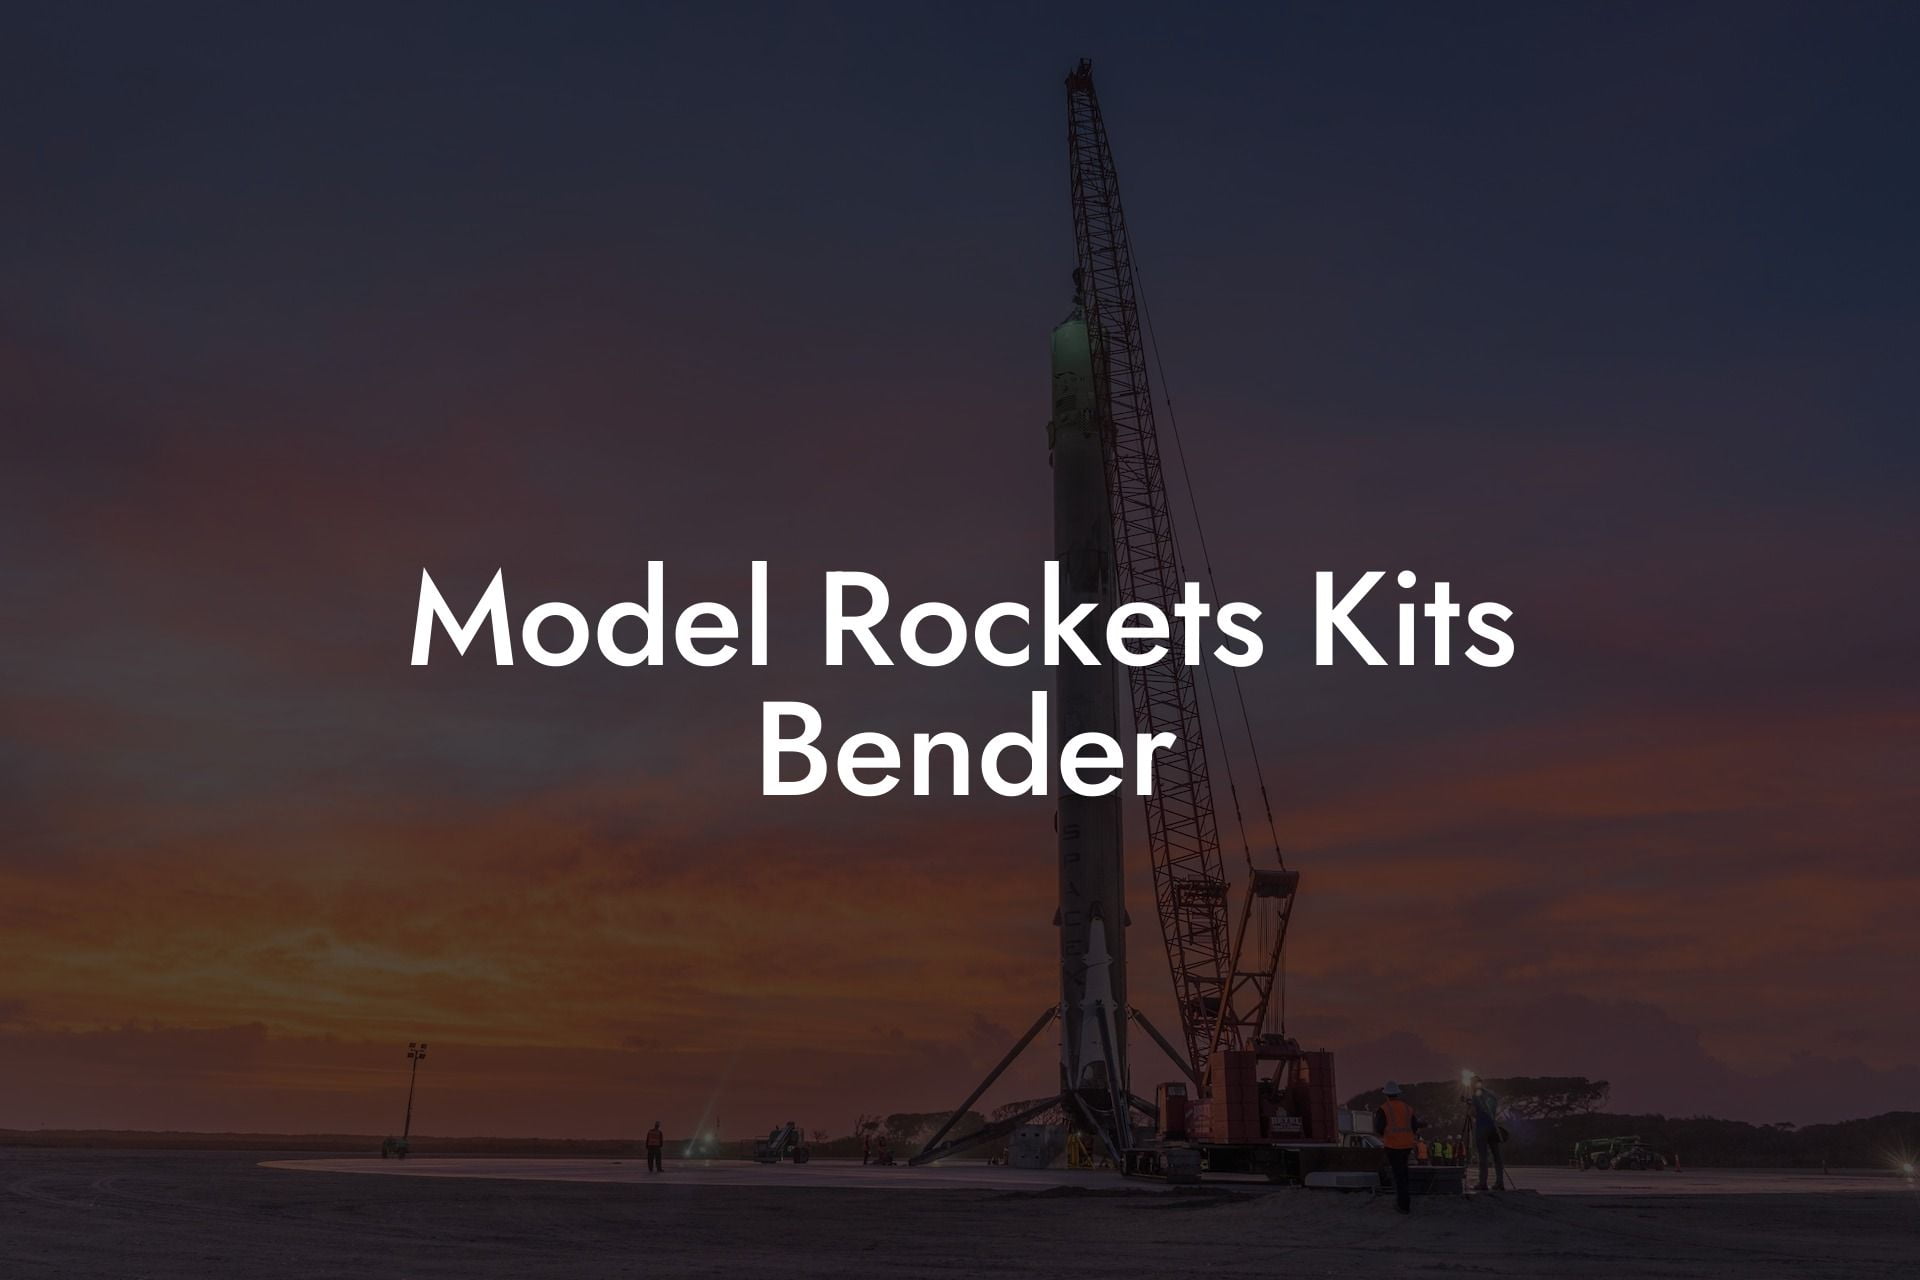 Model Rockets Kits Bender